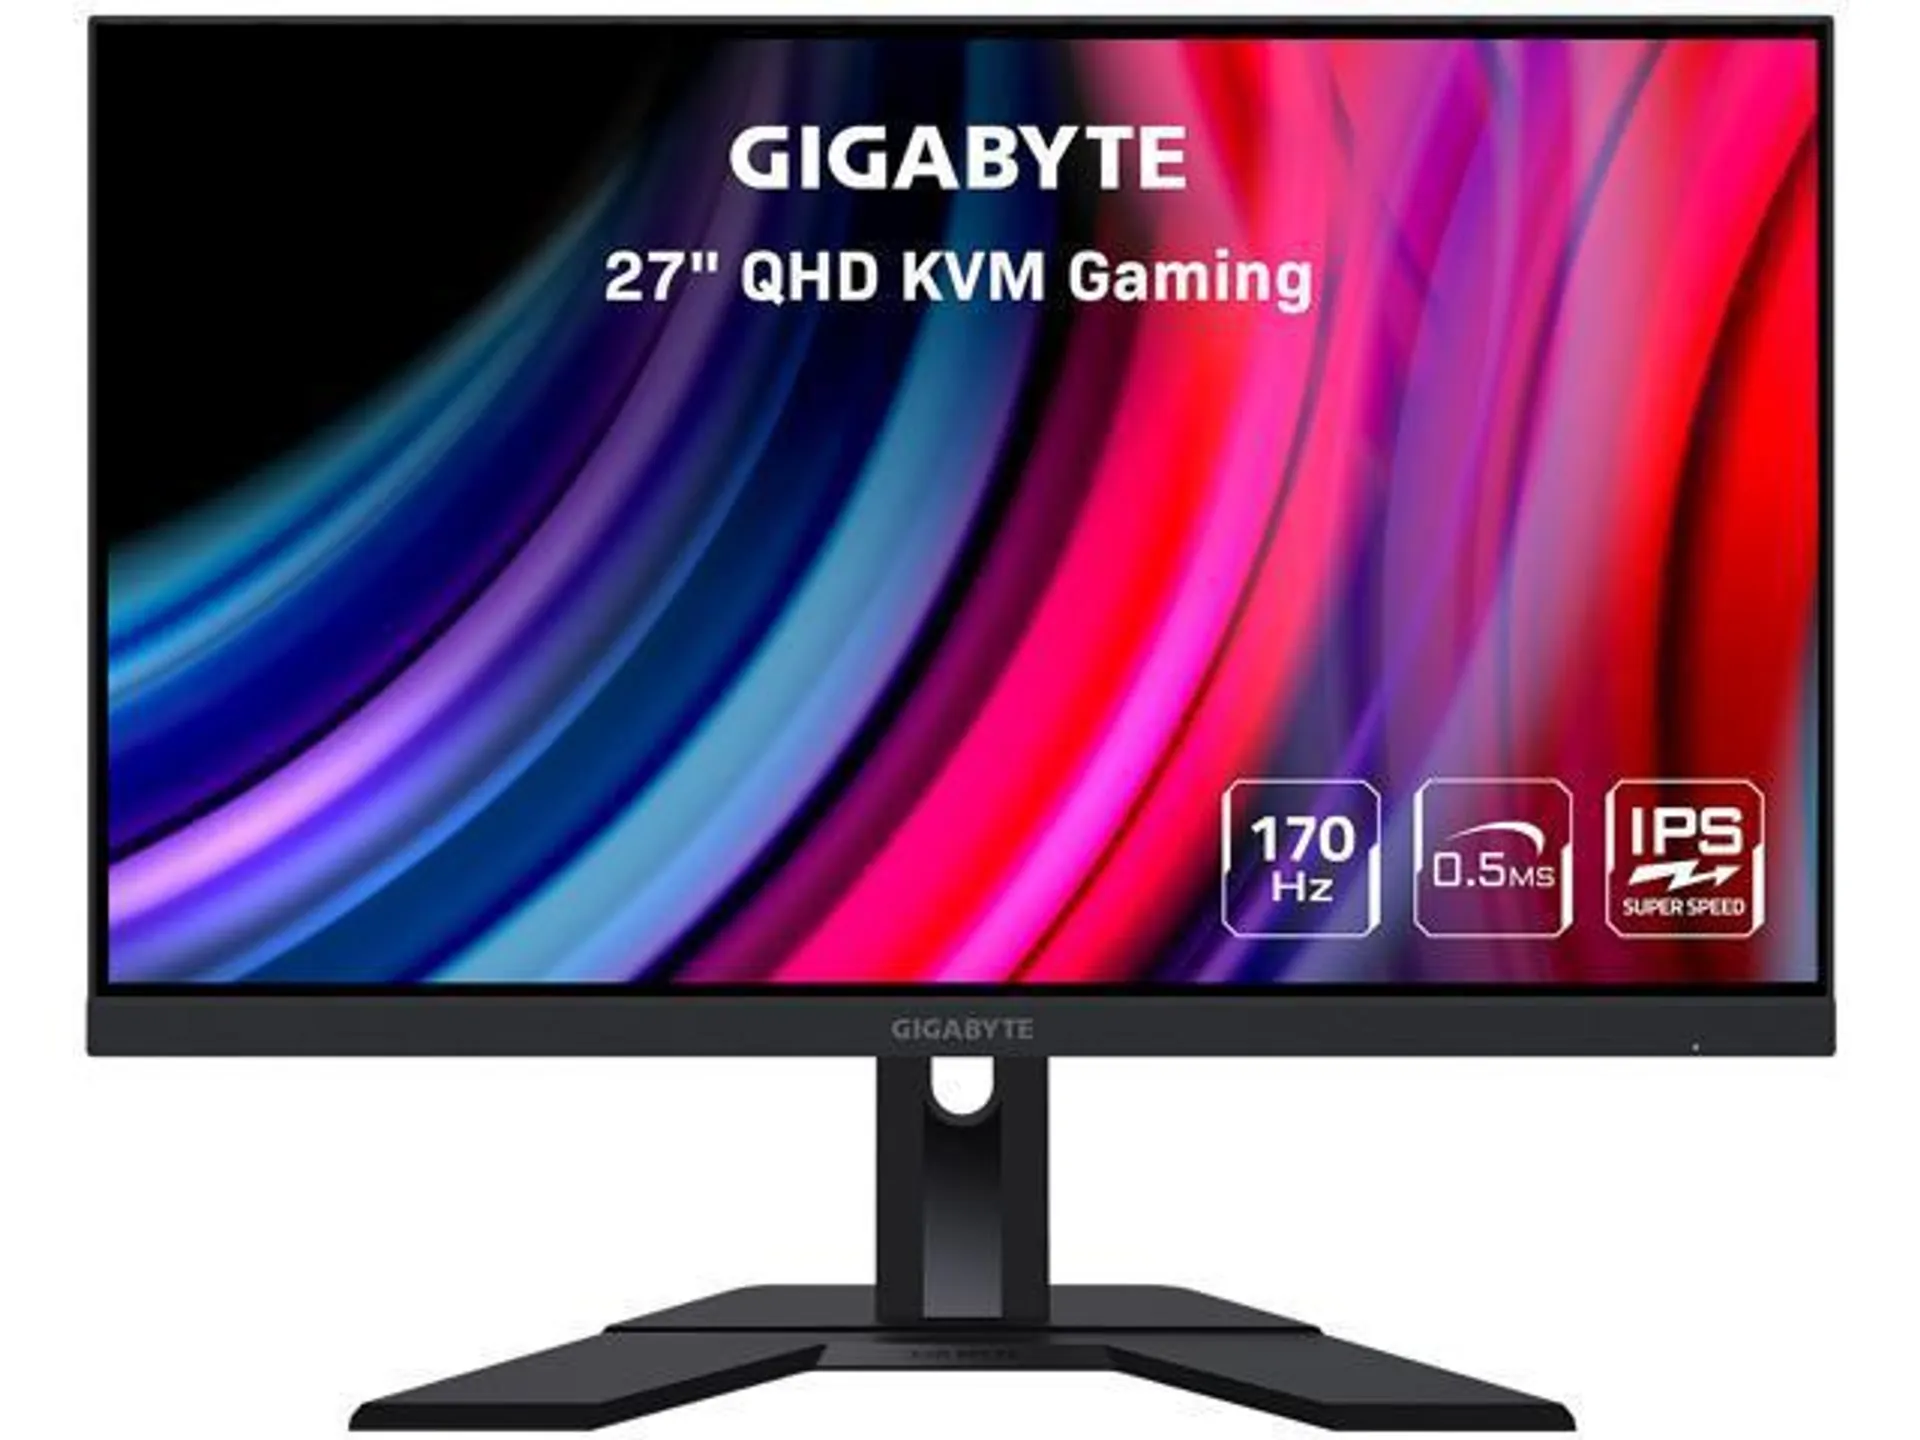 GIGABYTE M27Q 27" 170Hz 1440P KVM Gaming Monitor, 2560 x 1440 SS IPS, 0.5ms (MPRT), 92% DCI P3, HDR Ready, FreeSync Premium, 1x DisplayPort 1.2, 2x HDMI 2.0, 2x USB 3.0, 1x USB Type-C, Height Adjustable